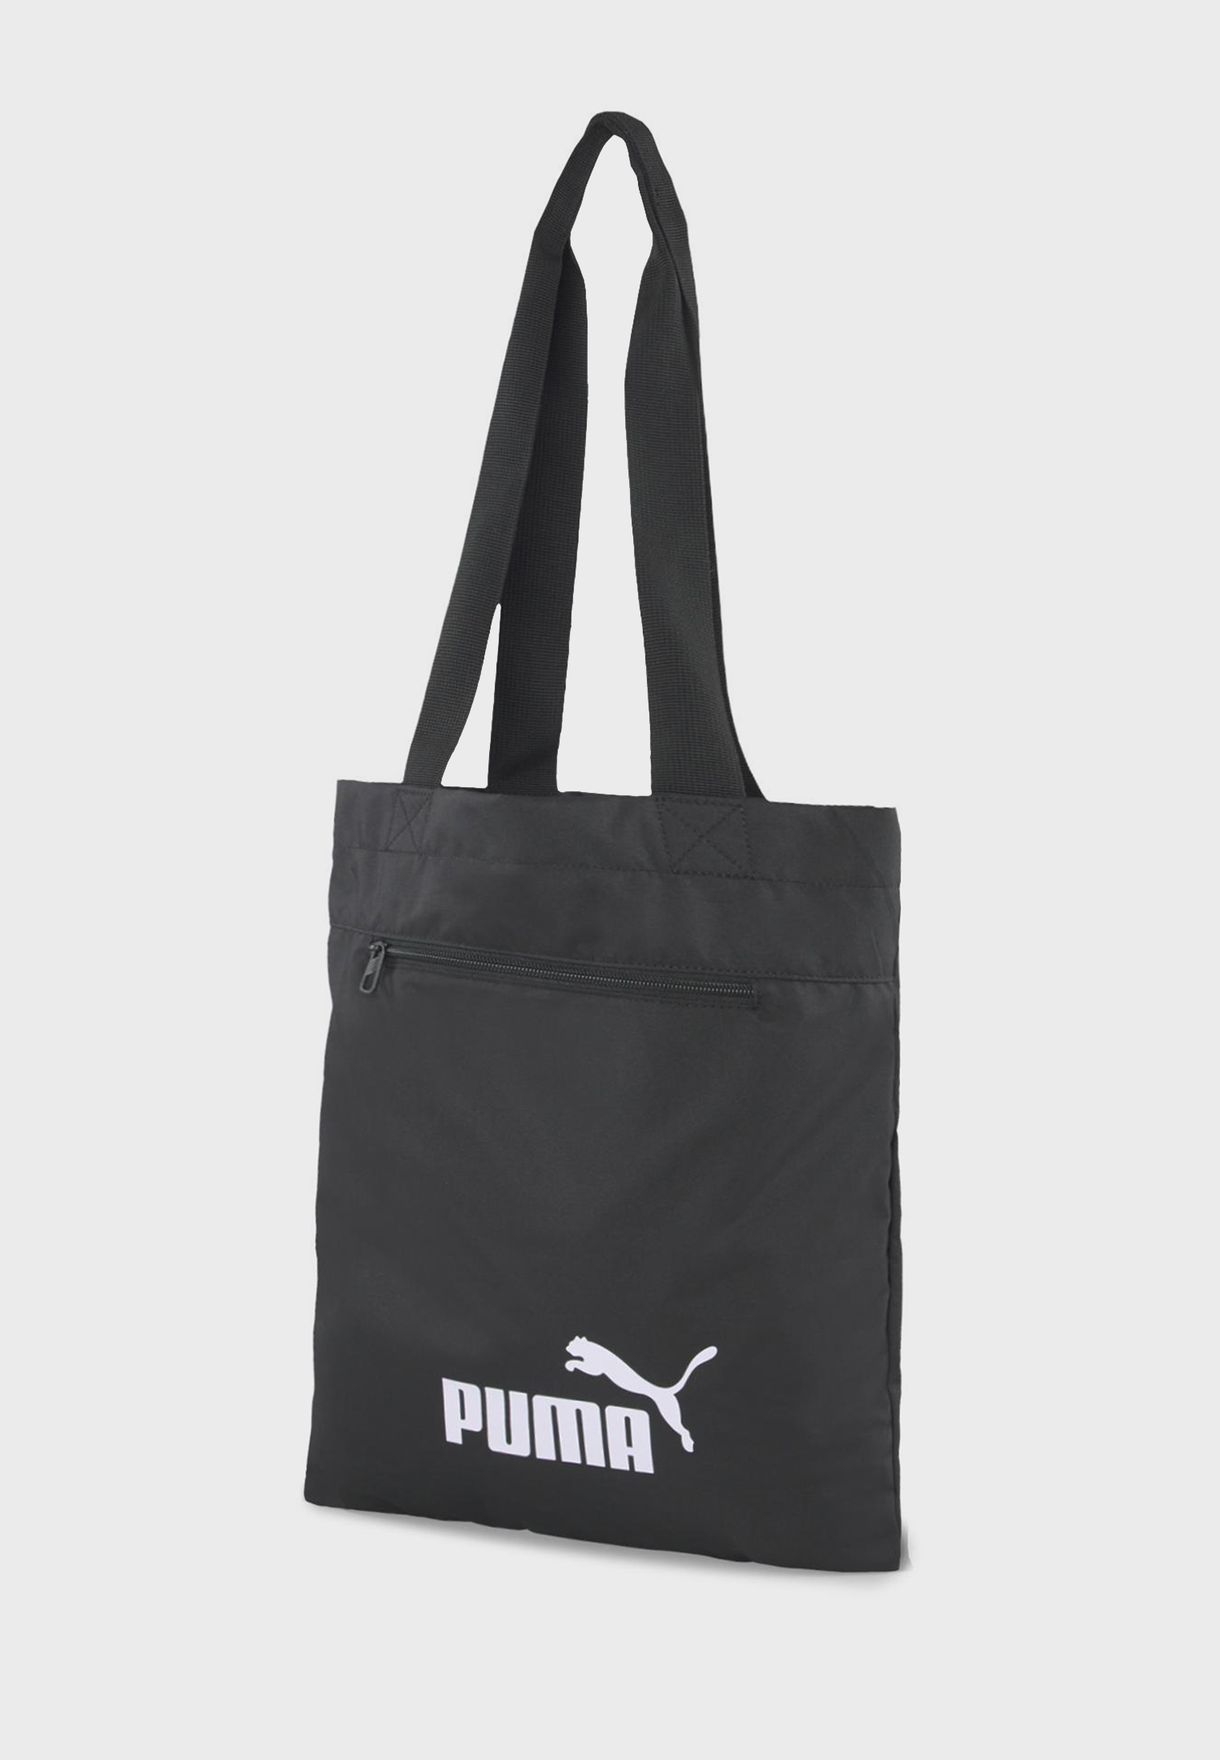 Phase men shopper bag